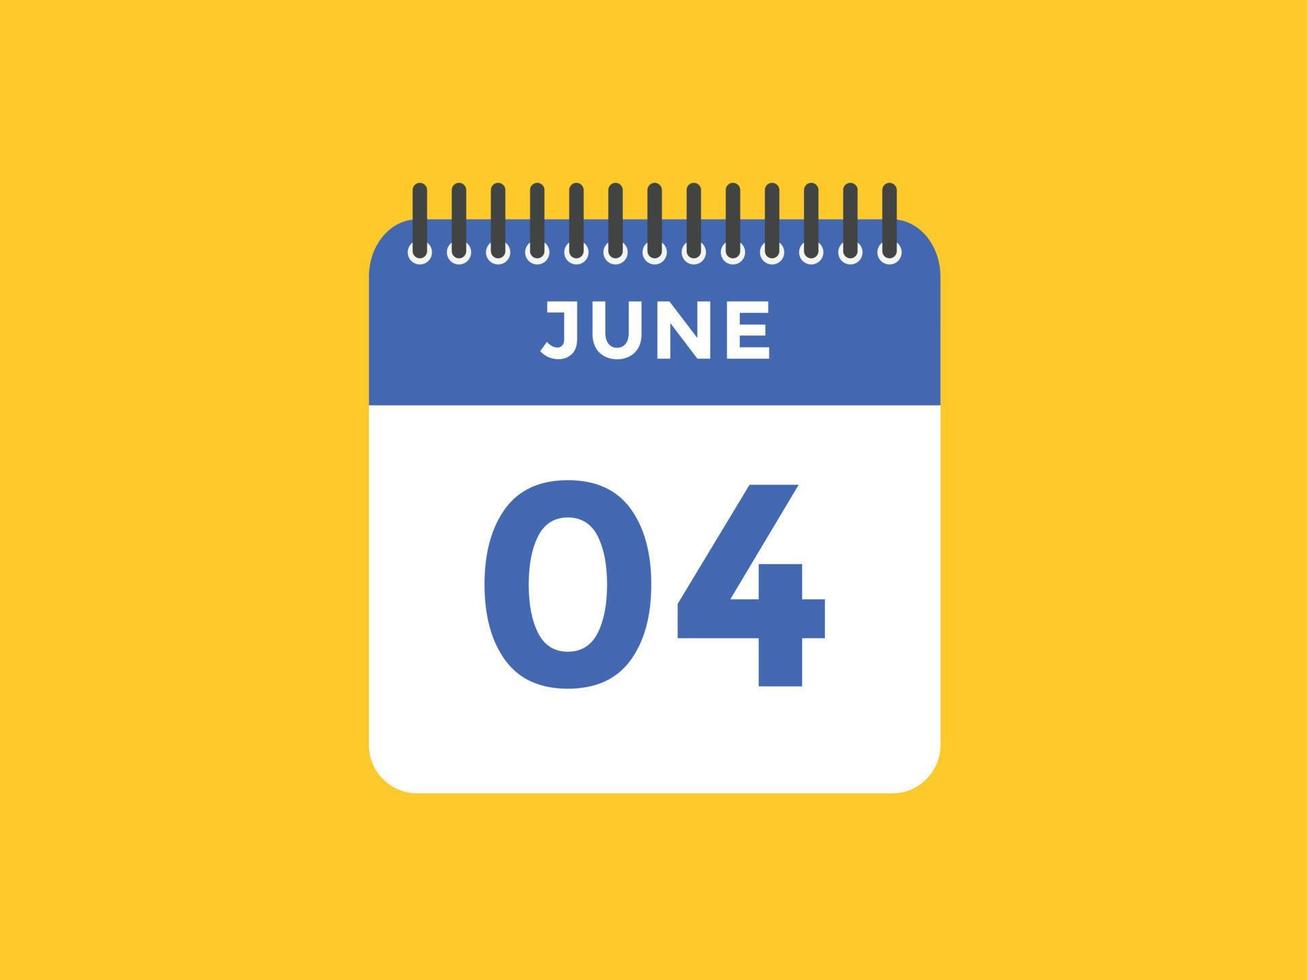 june 4 calendar reminder. 4th june daily calendar icon template. Calendar 4th june icon Design template. Vector illustration